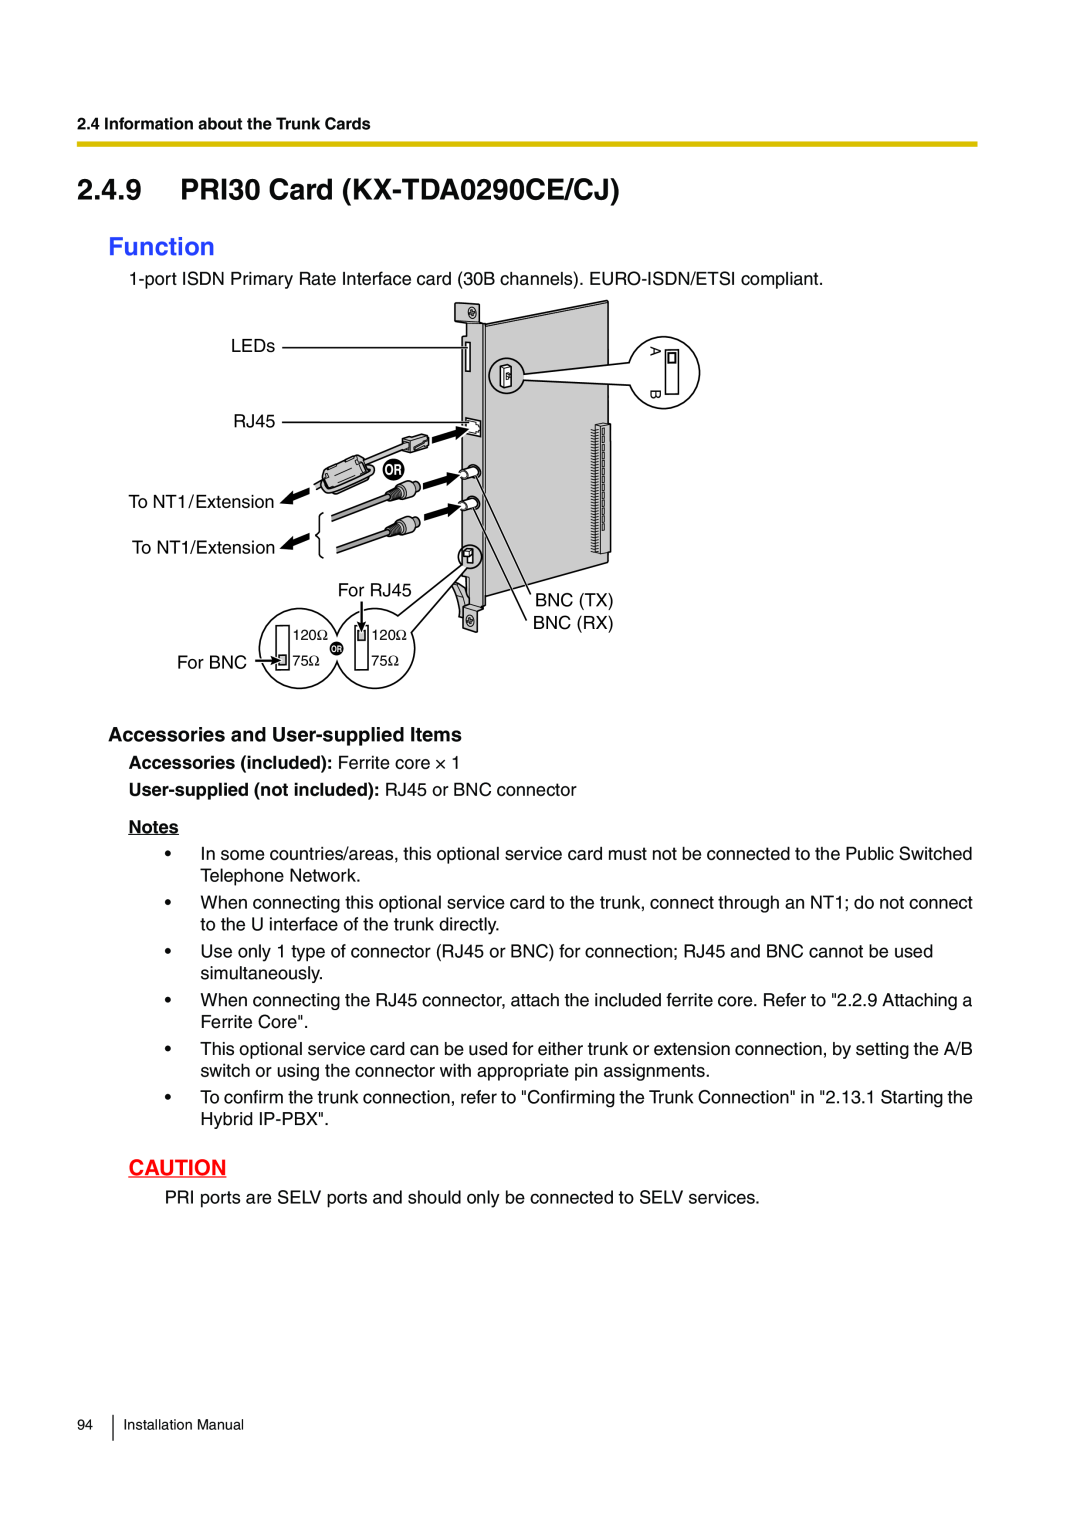 Panasonic KX-TDA100 installation manual 2.4.9 PRI30 Card KX-TDA0290CE/CJ, Function, Accessories and User-supplied Items 